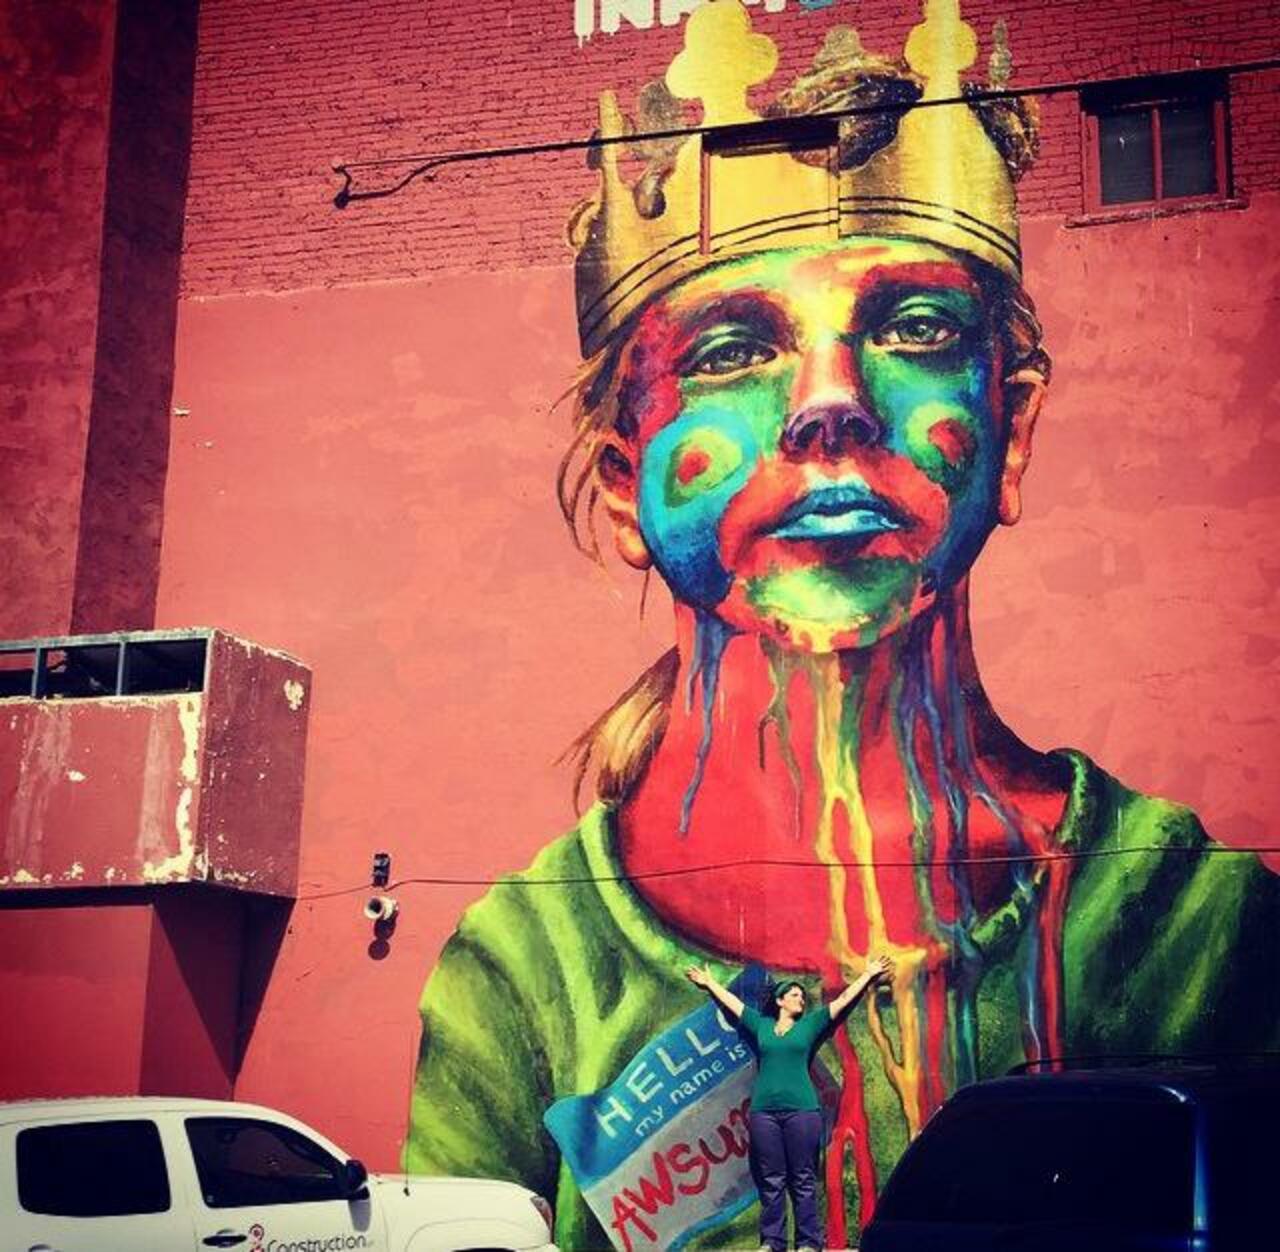  RT @GoogleStreetArt: Street Art by Naomi Haverland in Denver Colorado 

#art #arte #graffiti #streetart http://t.co/u9BX3gfKmi